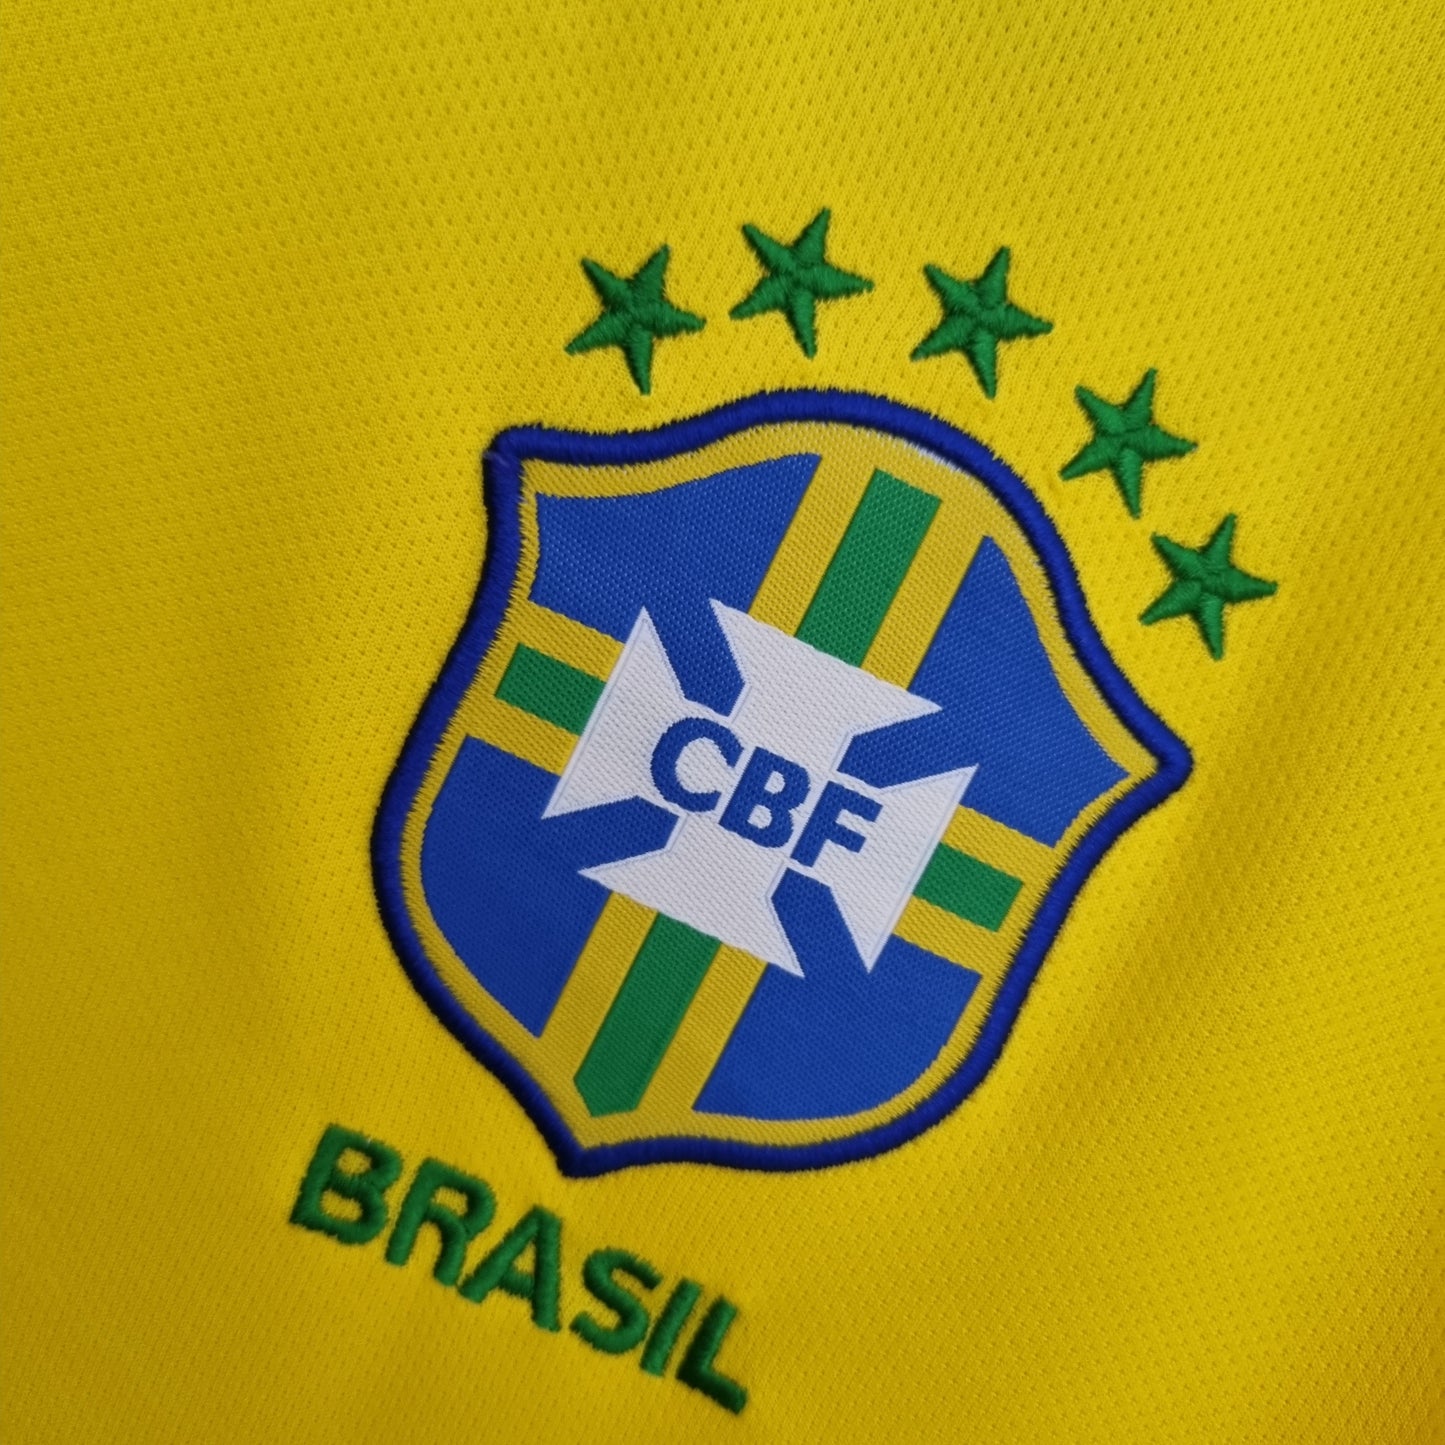 Camisa Retrô Brasil Home 2018/19